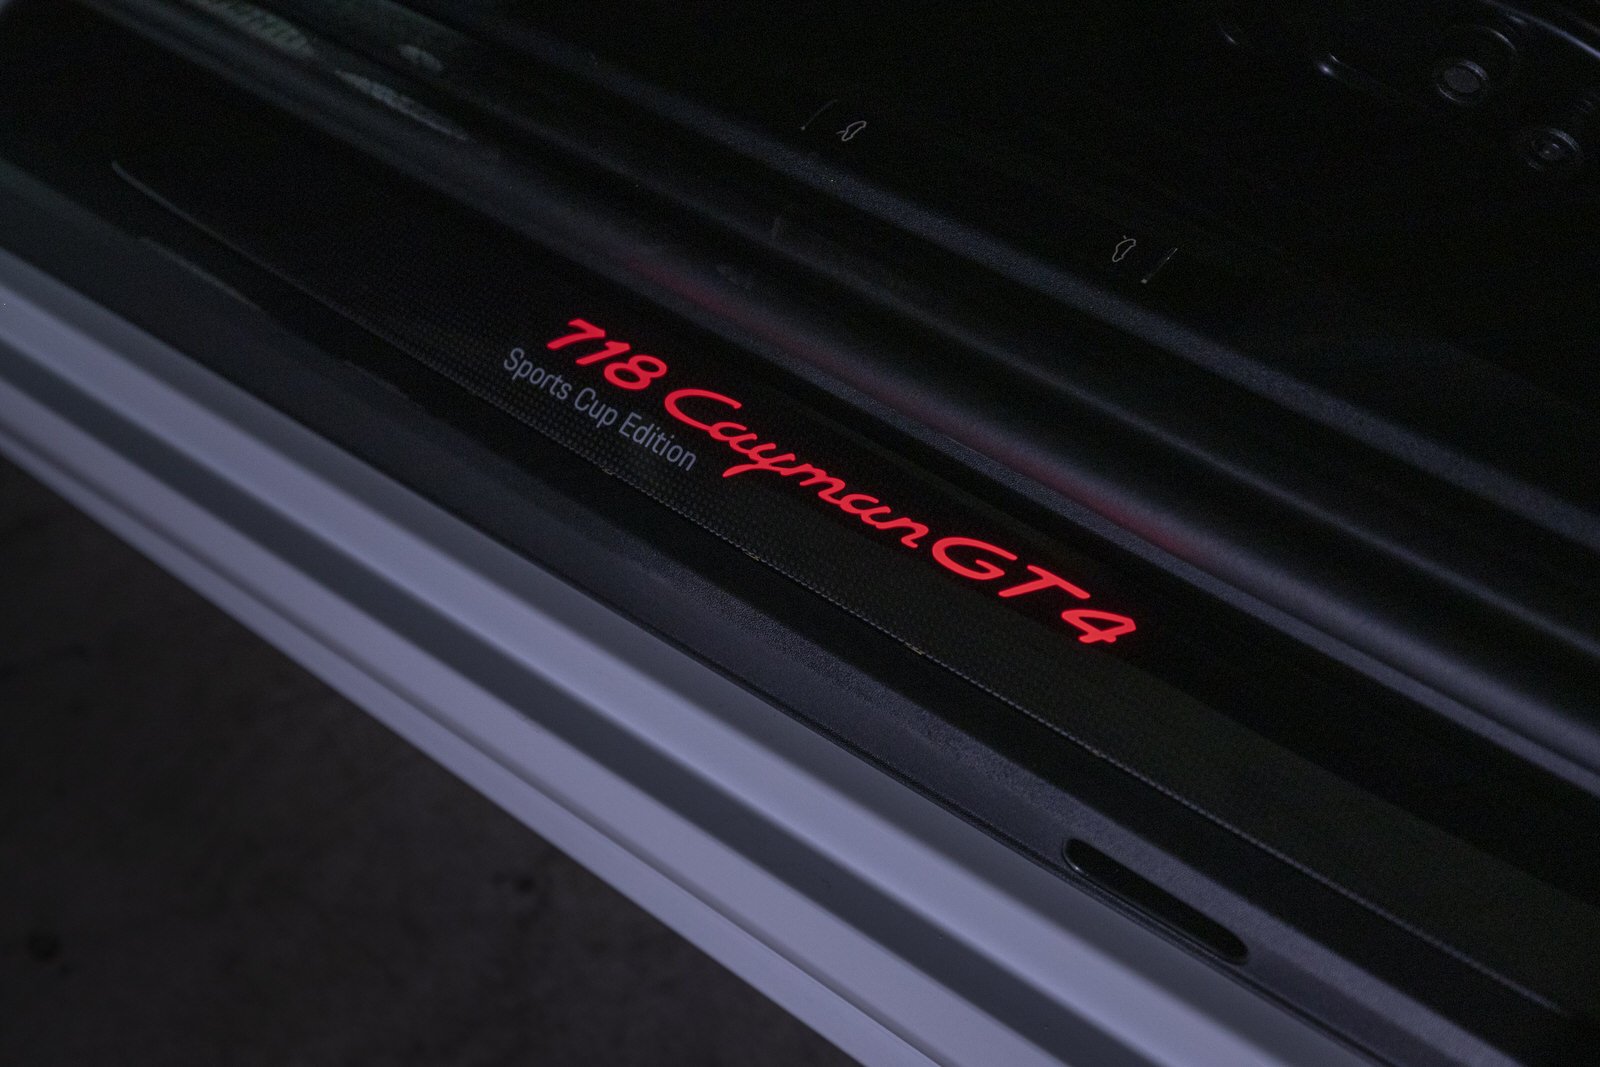 klassik kontor duesseldorf 2019 Porsche 718 Coupé Cayman GT4 Sports Cup Edition - Weiss-Rot pic 03.jpg